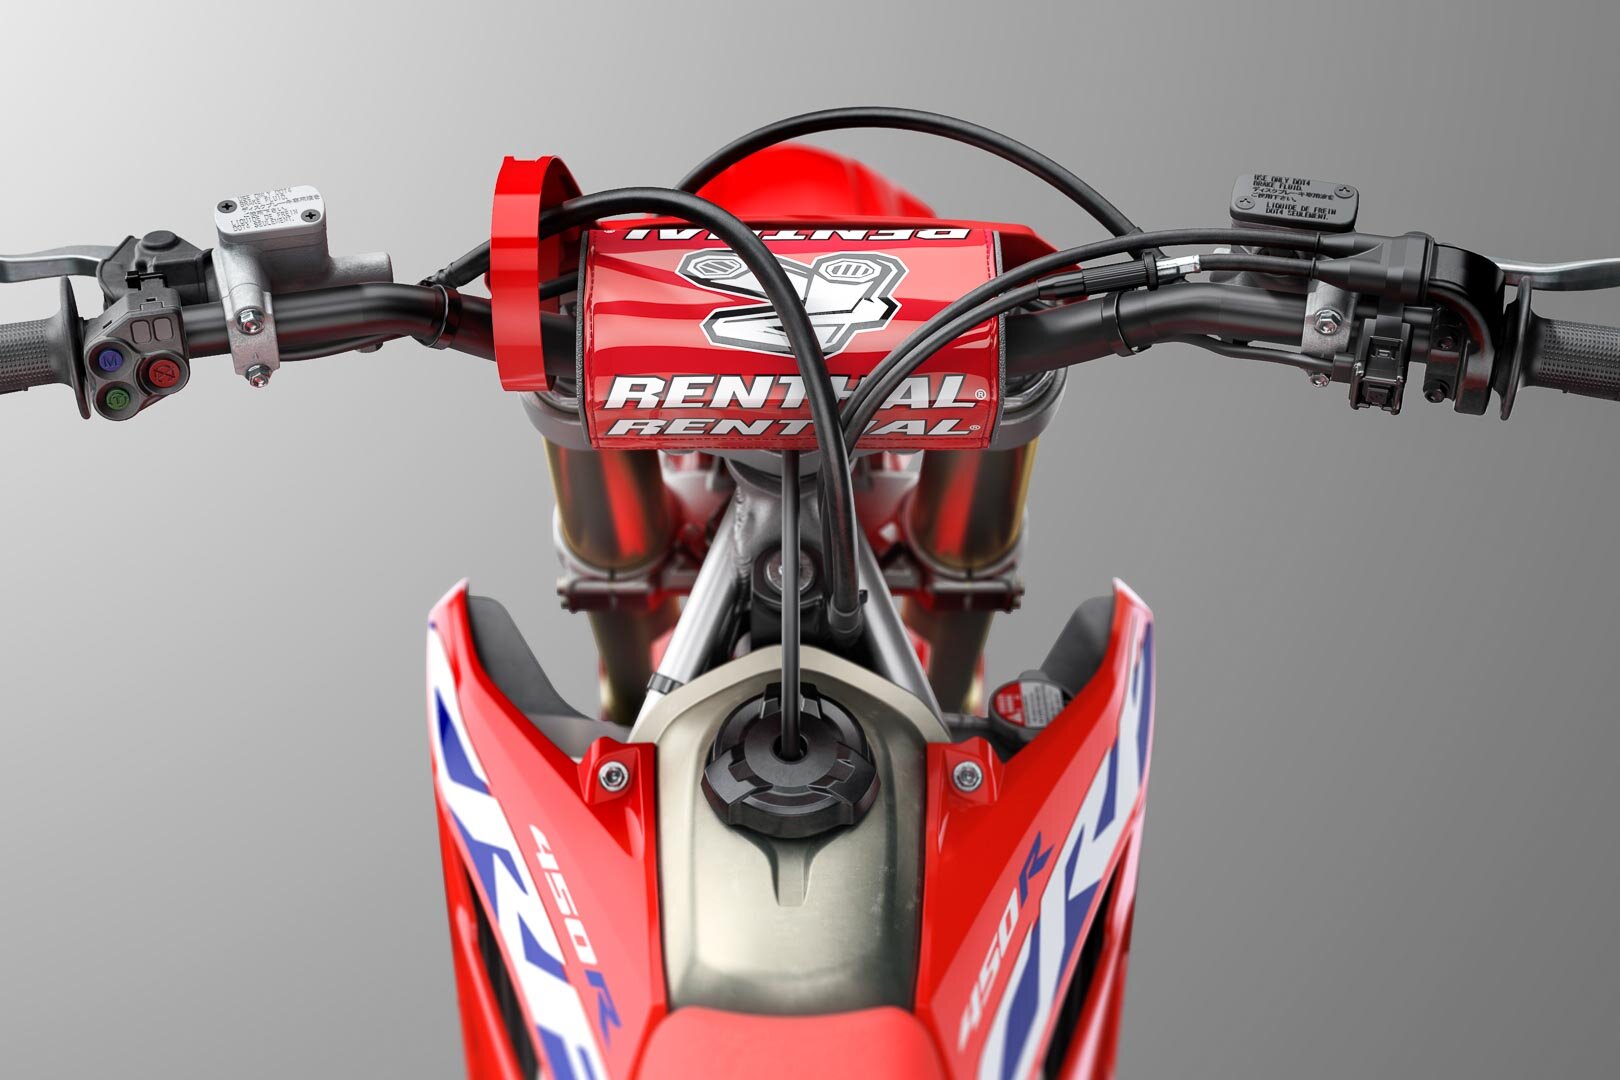 2021-Honda-CRF450R-First-Look-motocross-supercross-motorcycle-1.jpg